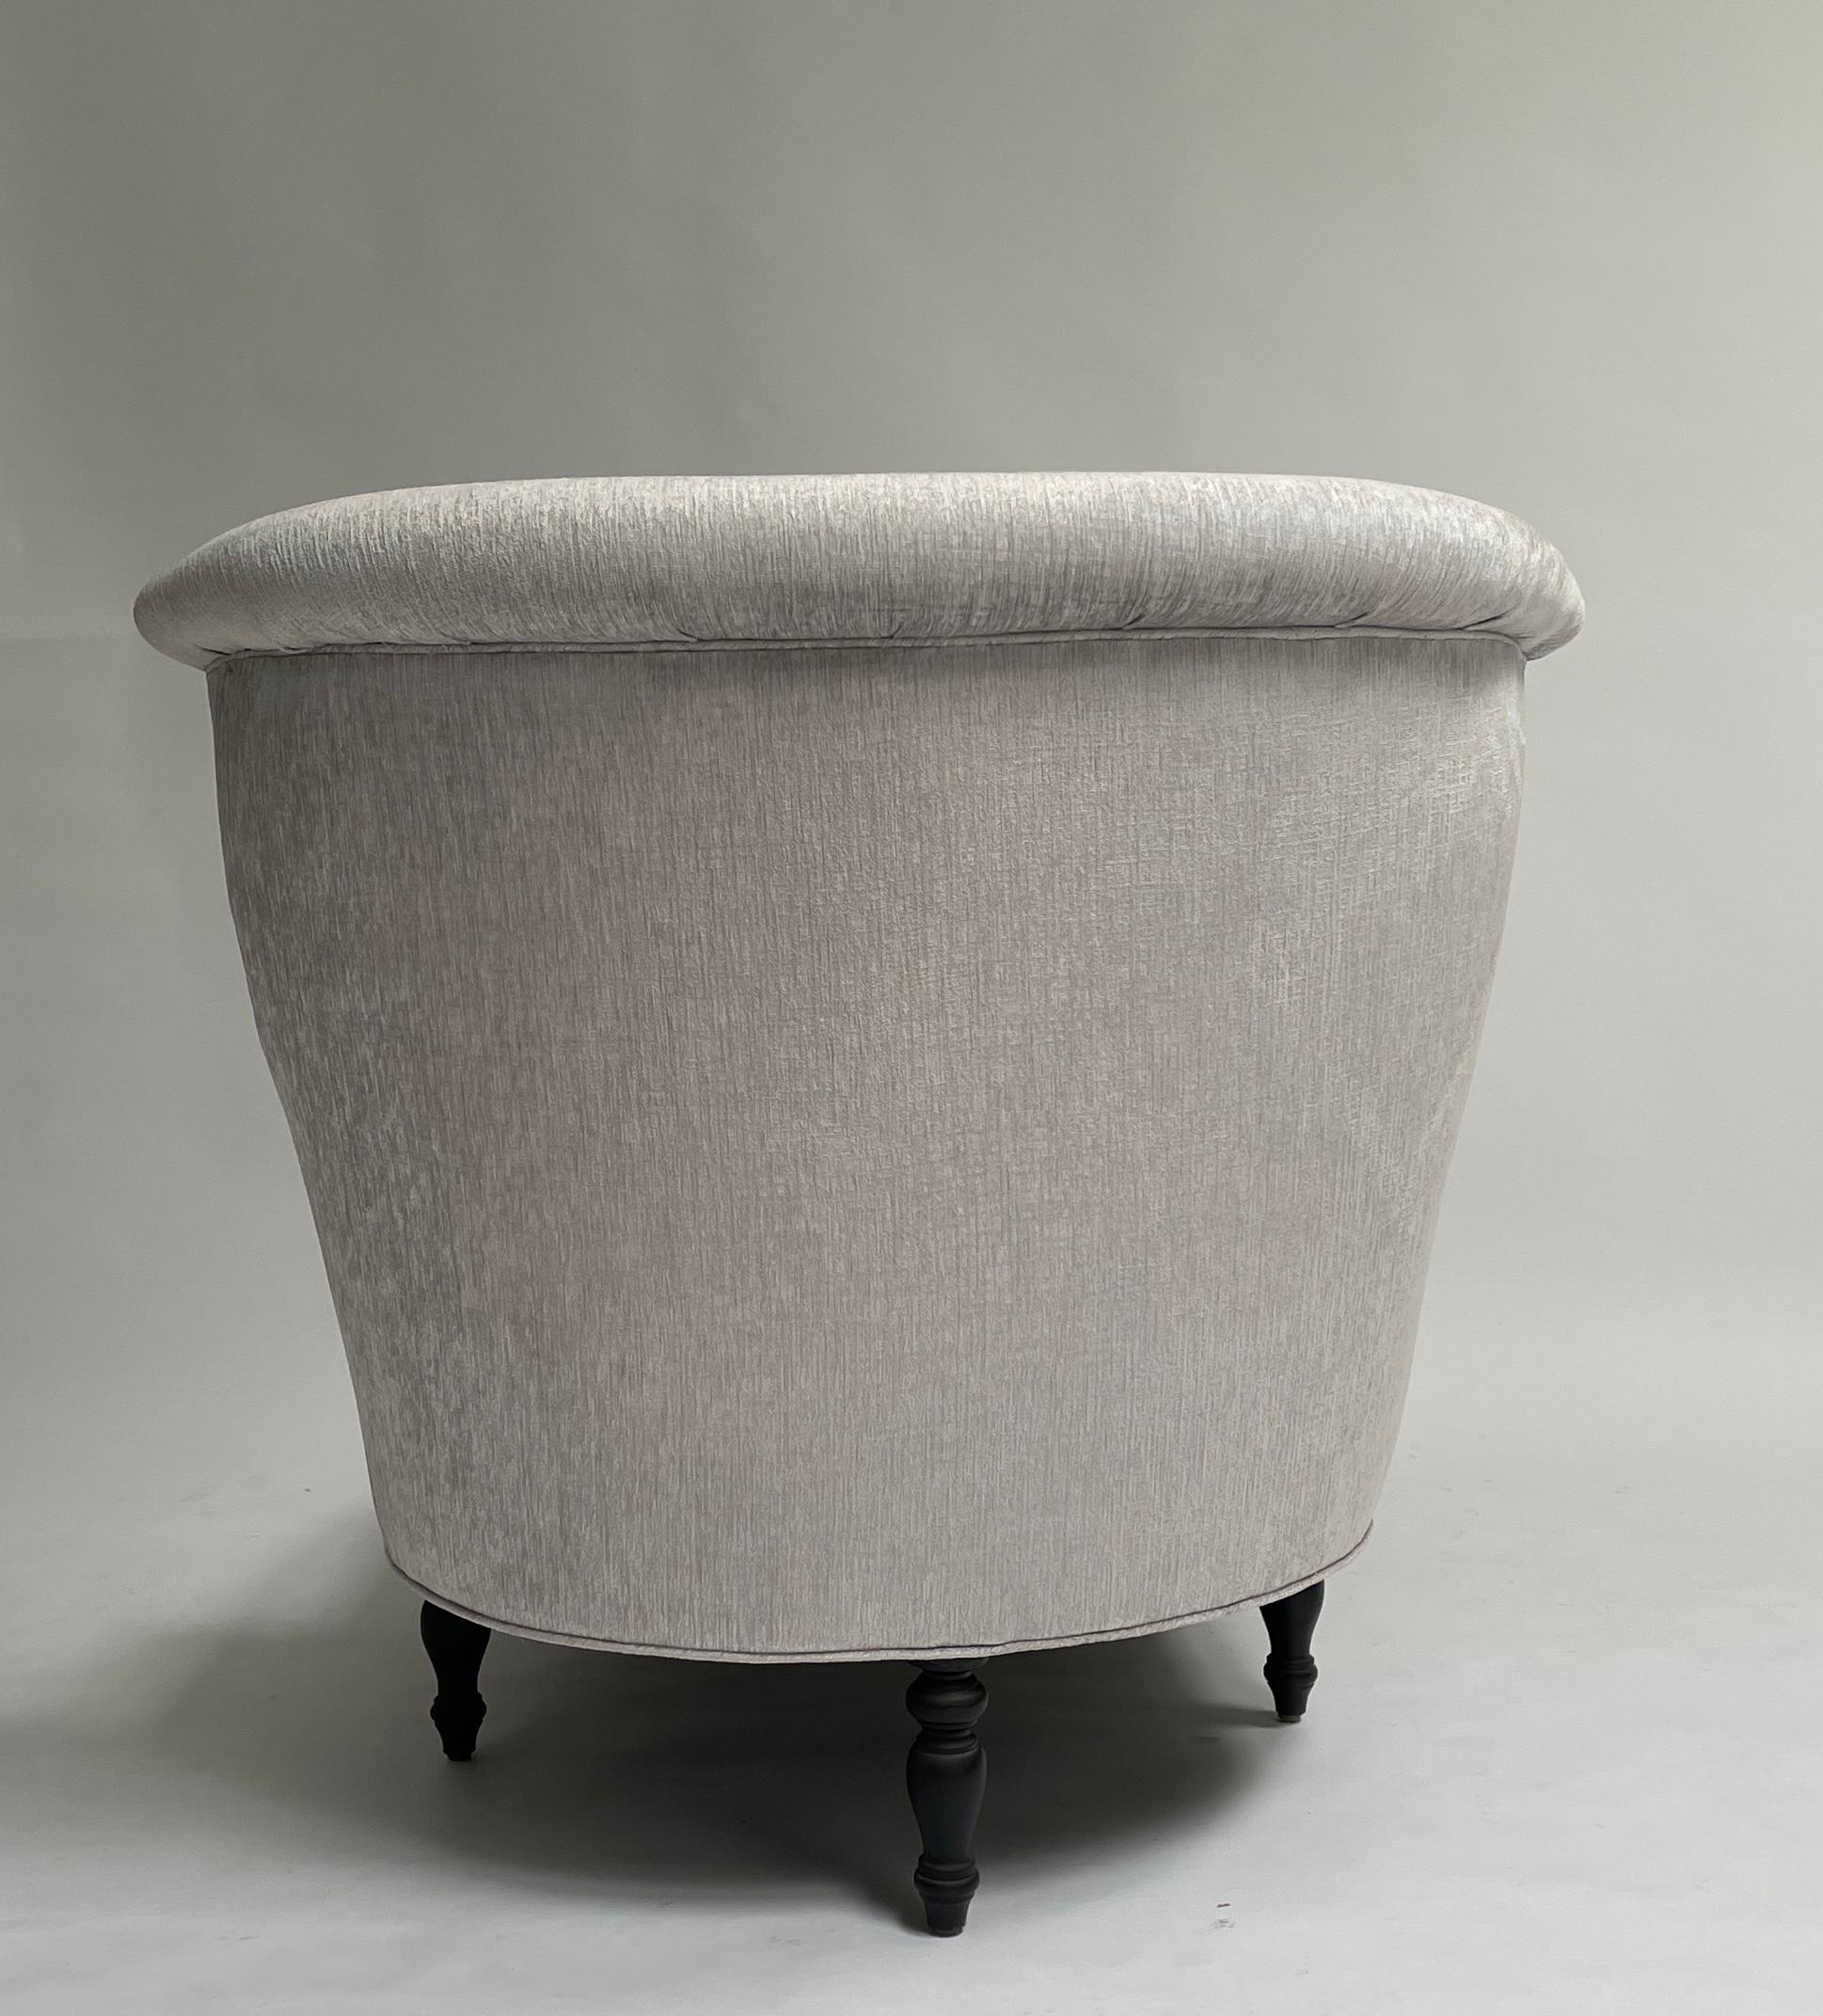 Garronne Chaise Lounge by Bourgeois Boheme Atelier, Silver For Sale 1